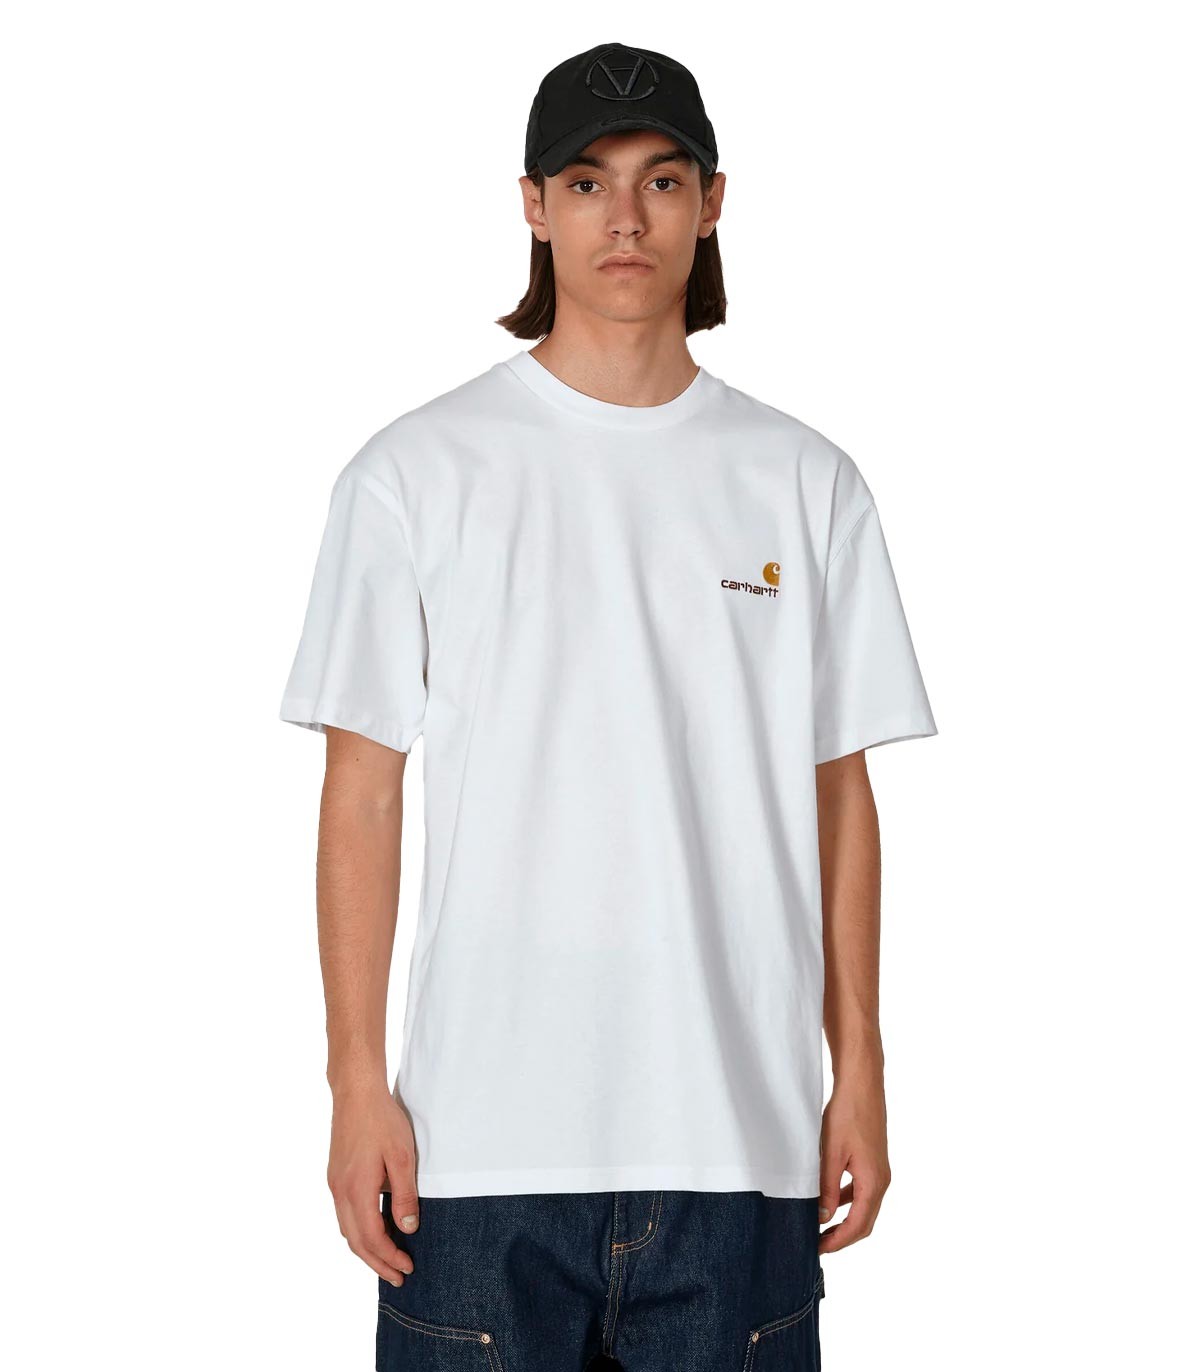 Carhartt Wip - Camiseta S/S American - Blanco